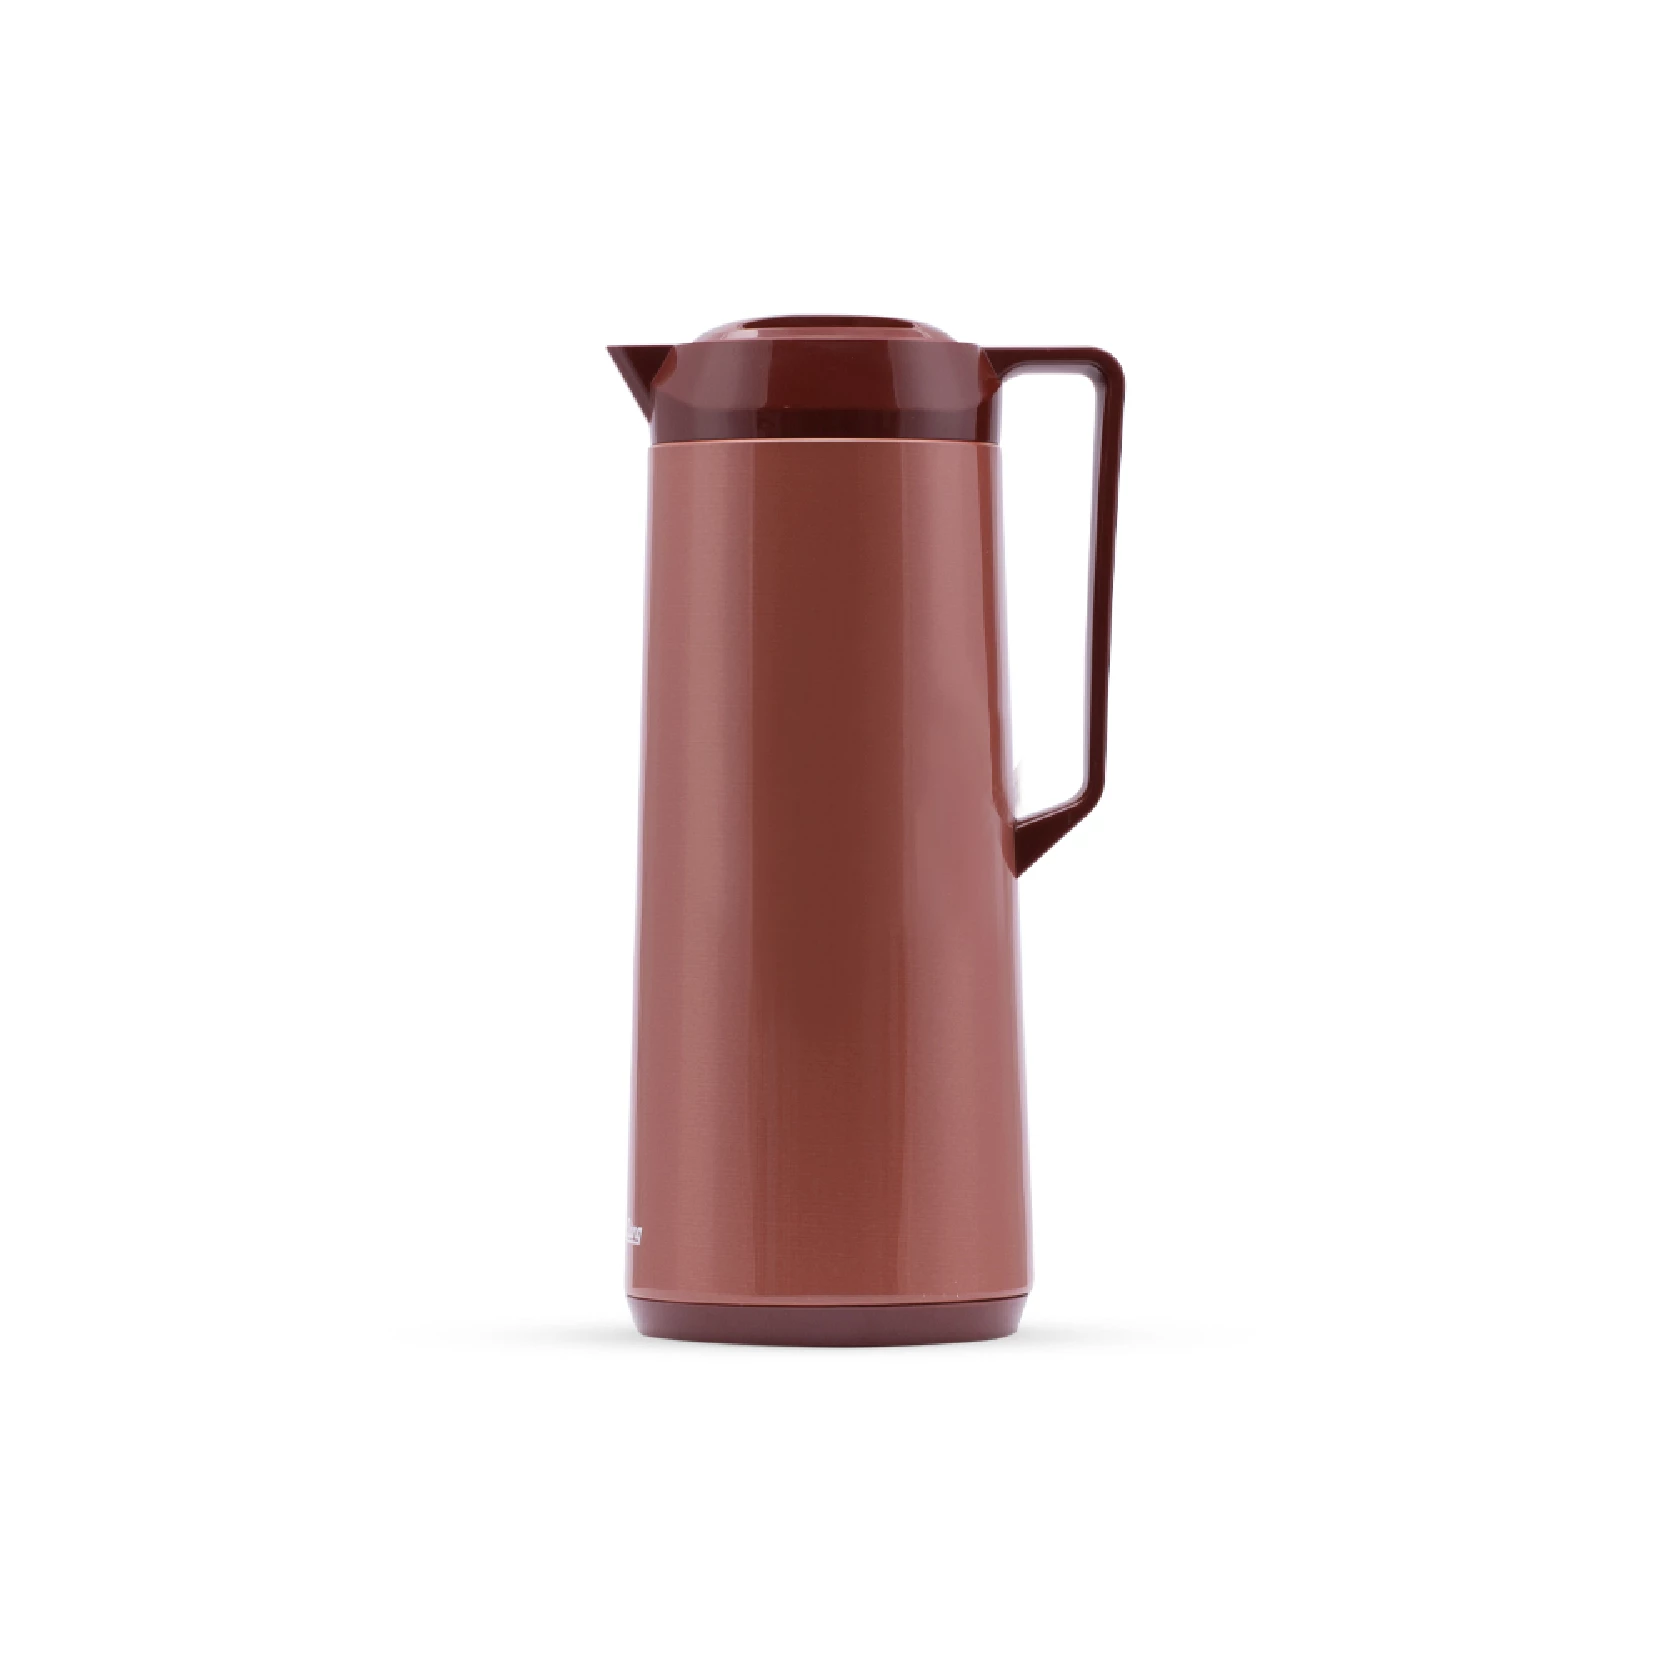 https://vacuumflask.rangdong.com.vn/static/Coffee-series-4/av2.jpg